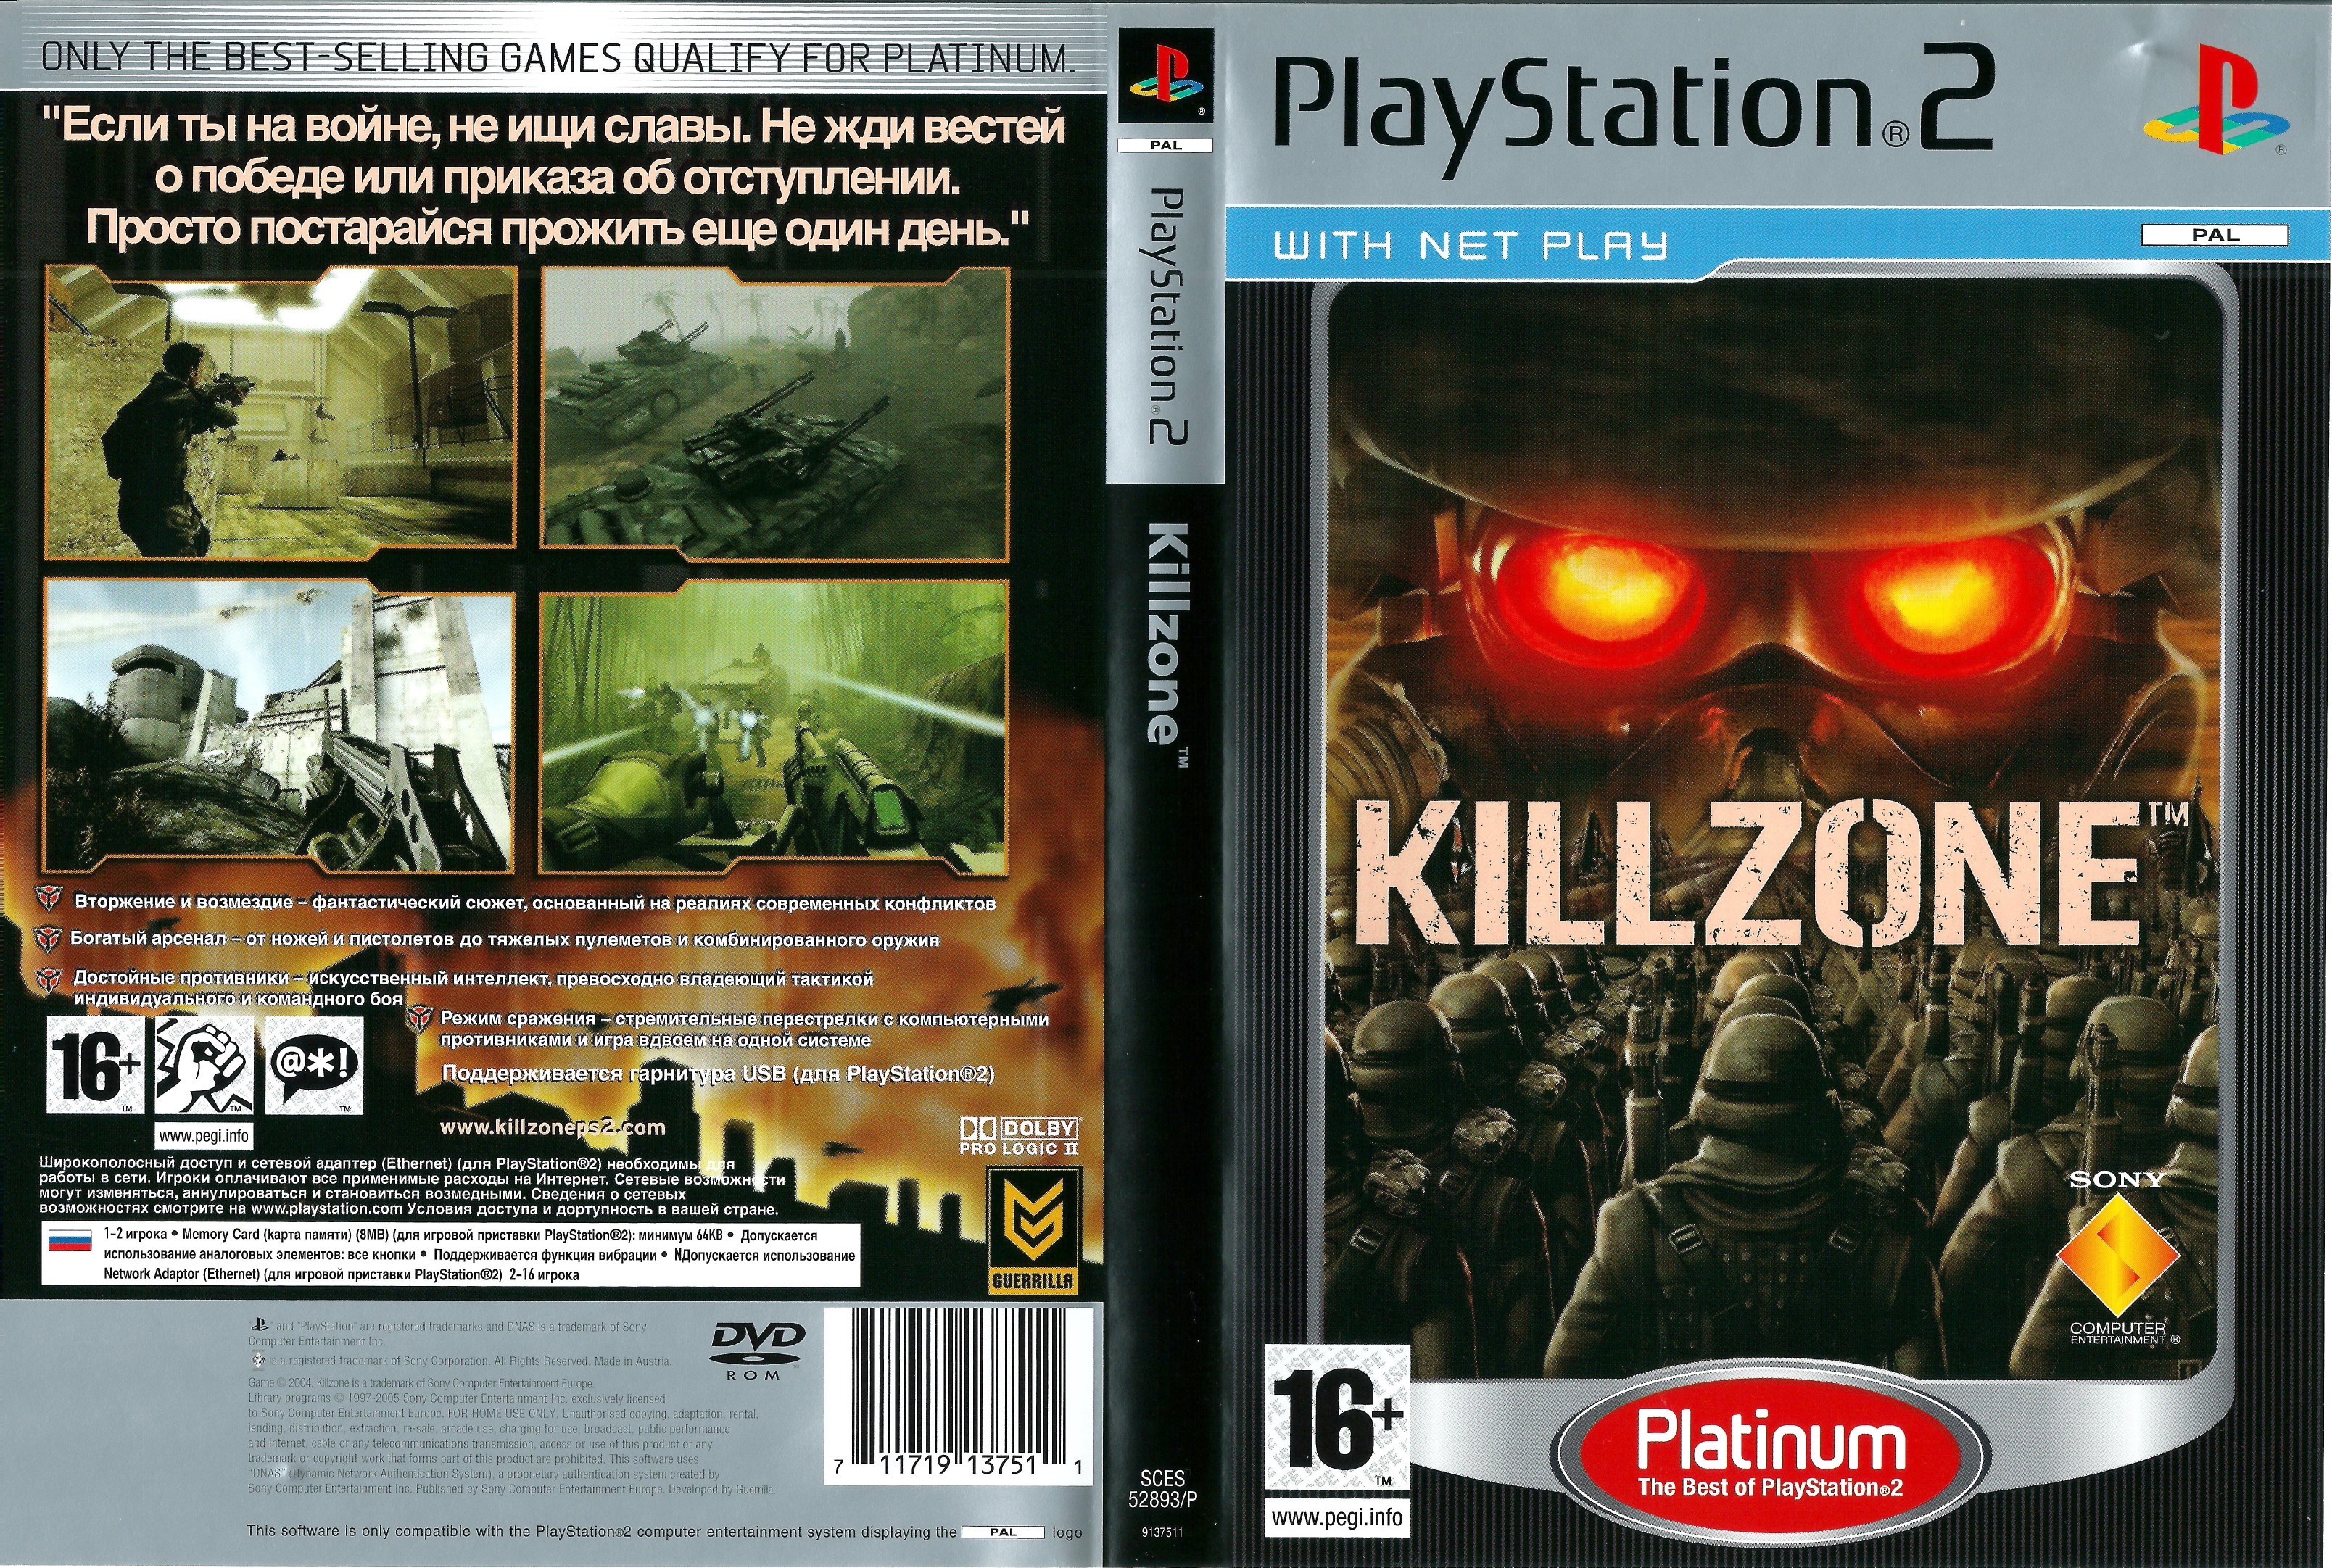 Killzone PS2 Platinum (Seminovo) - Play n' Play